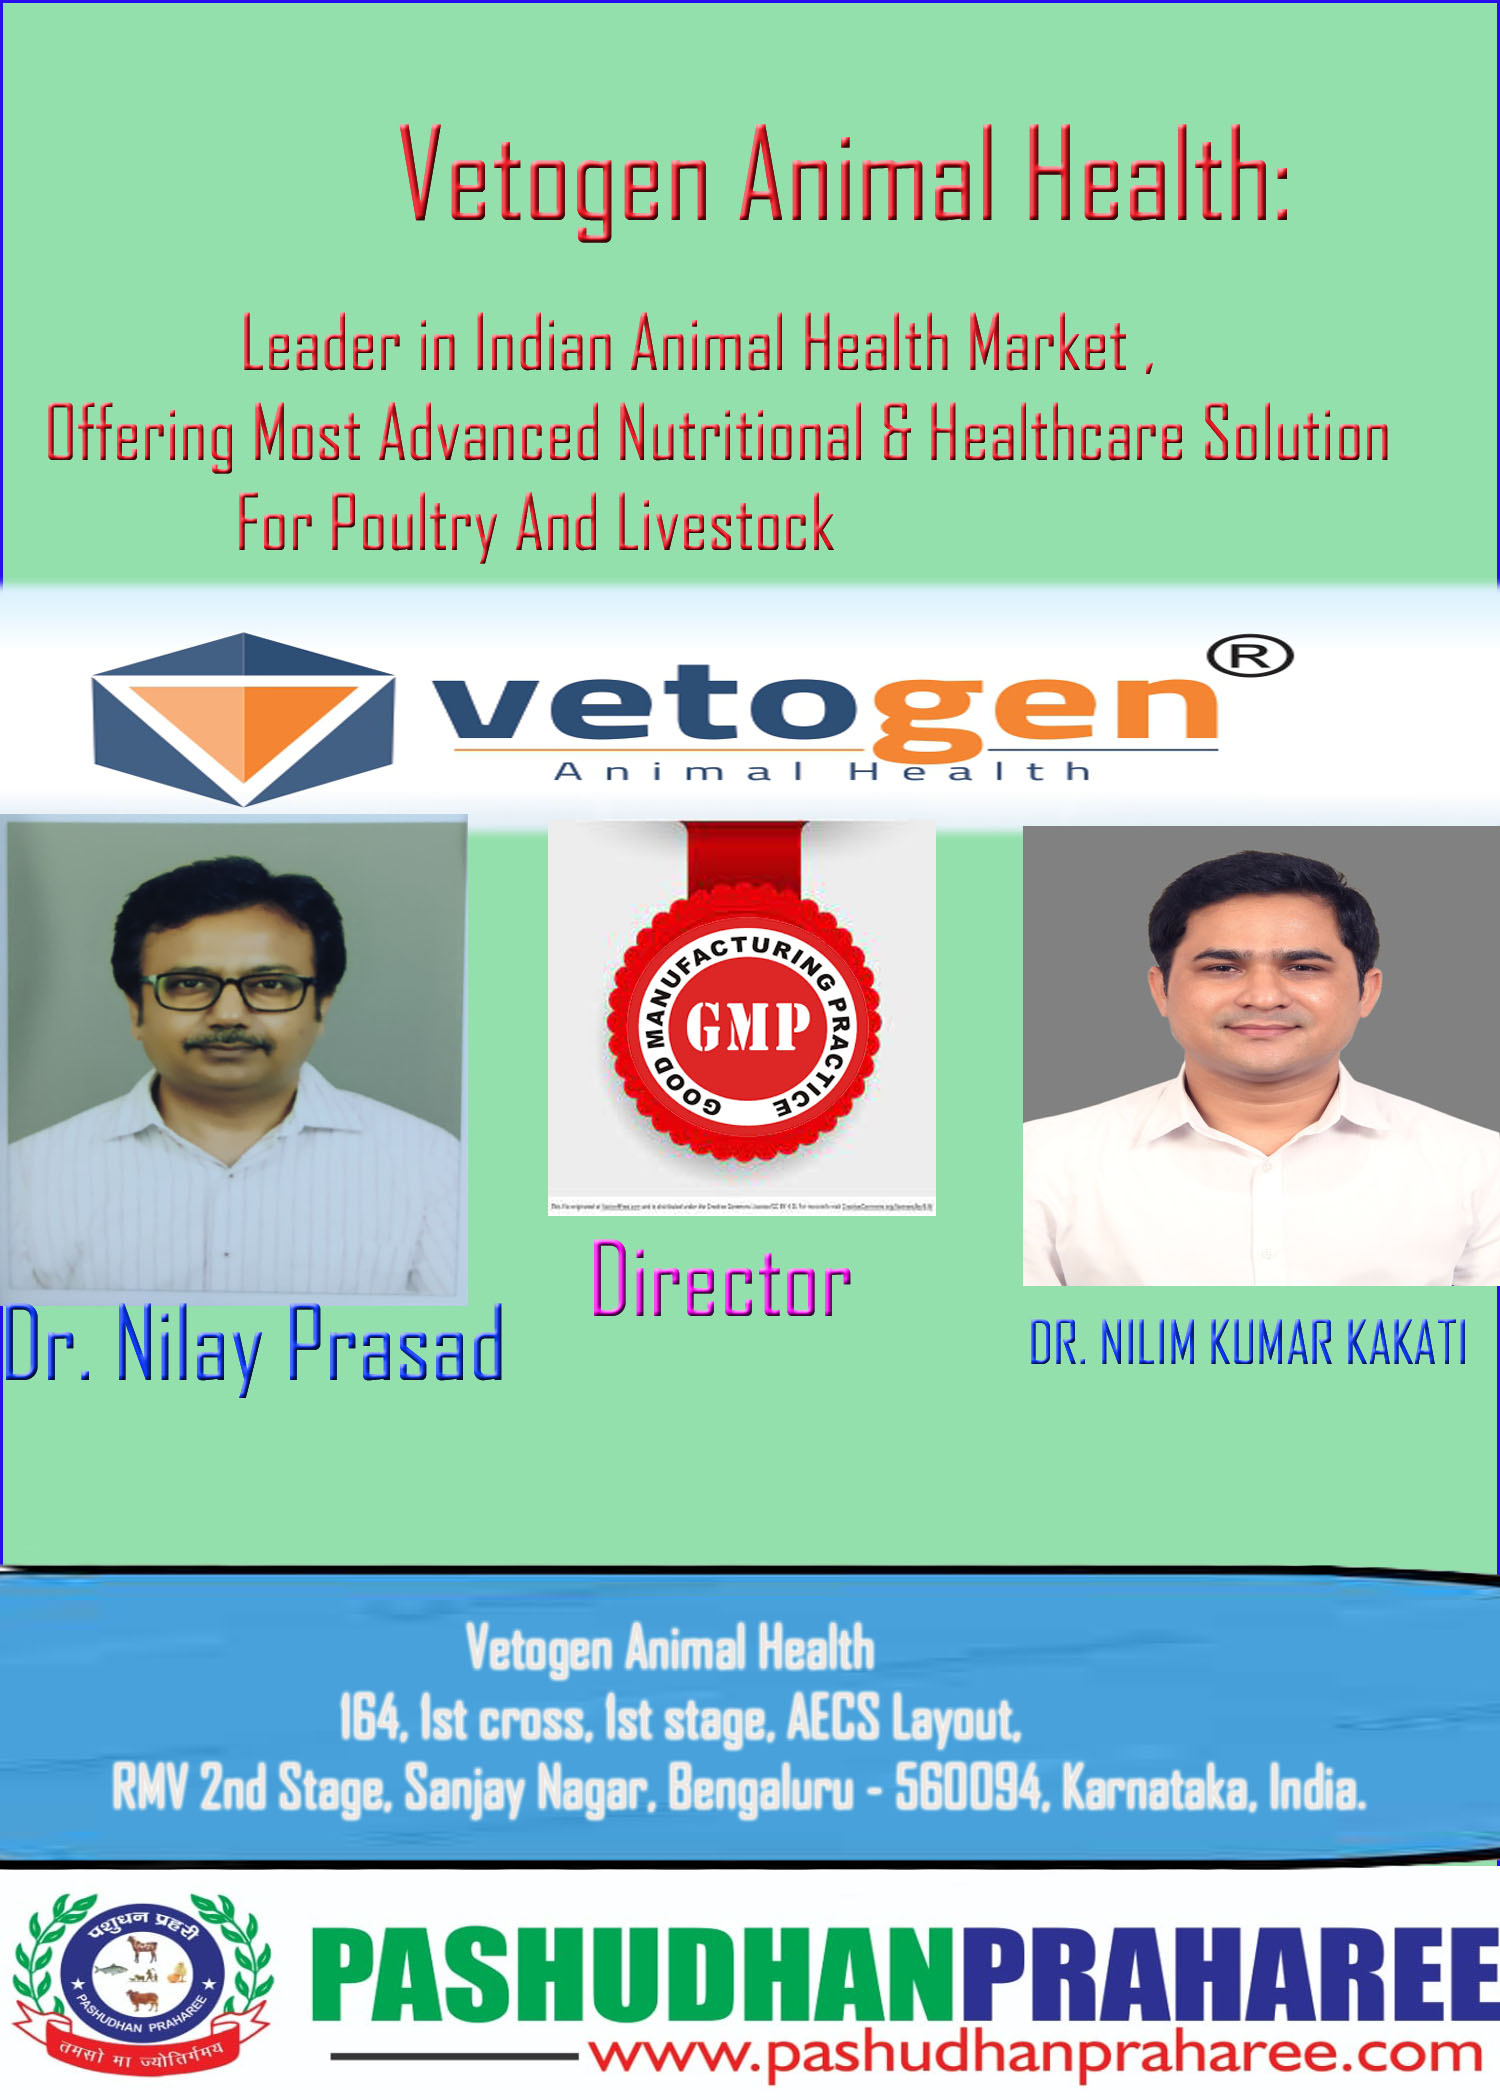 Vetogen Animal Health: Leader in Indian Animal Health Market